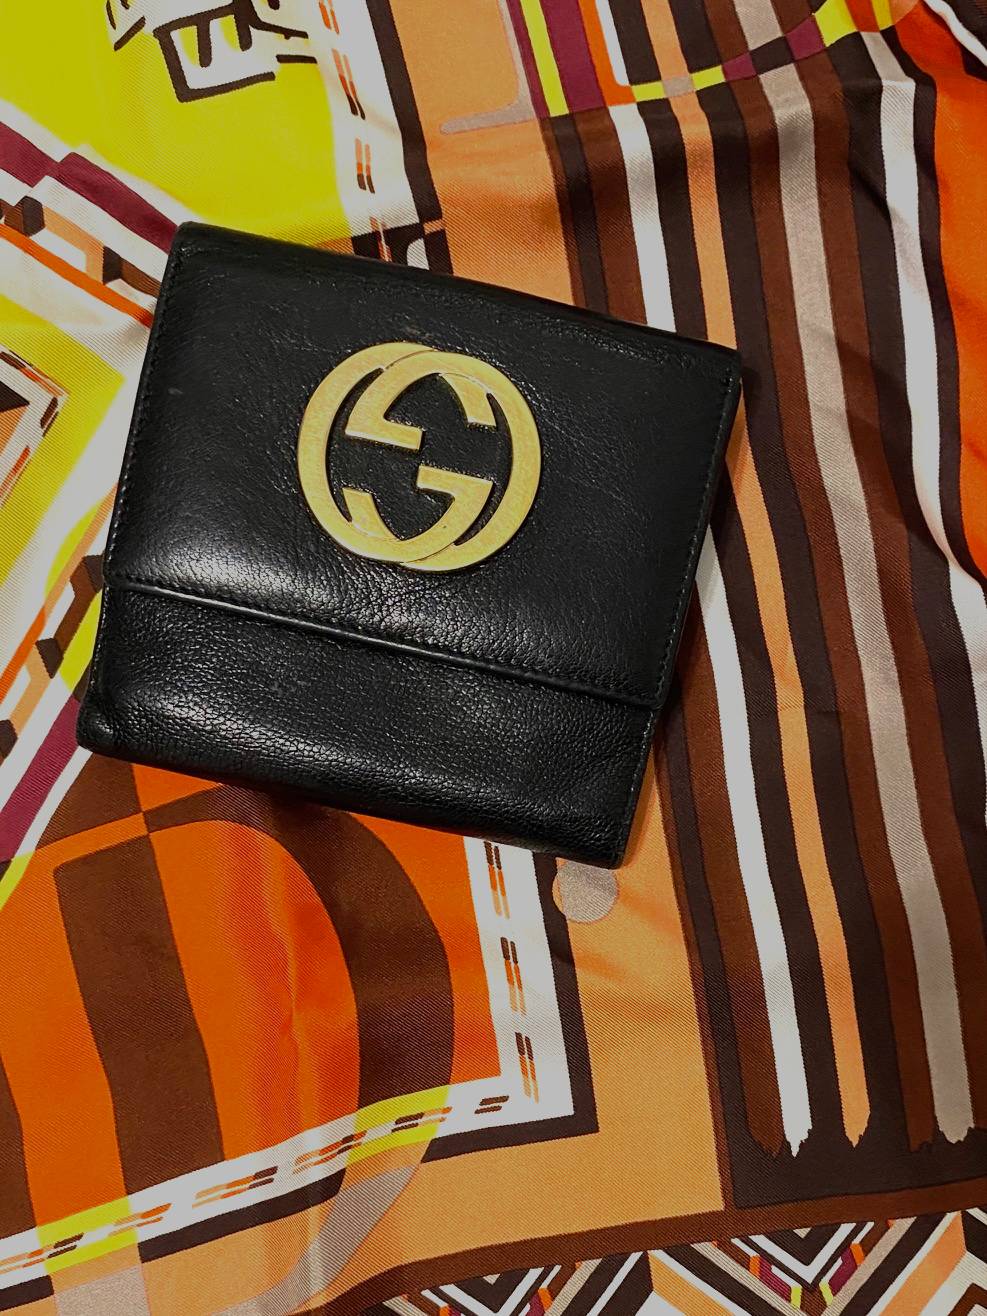 2000s Gucci Interlocking Logo Black Tri-Folded Leather Wallet - style - CHNGR